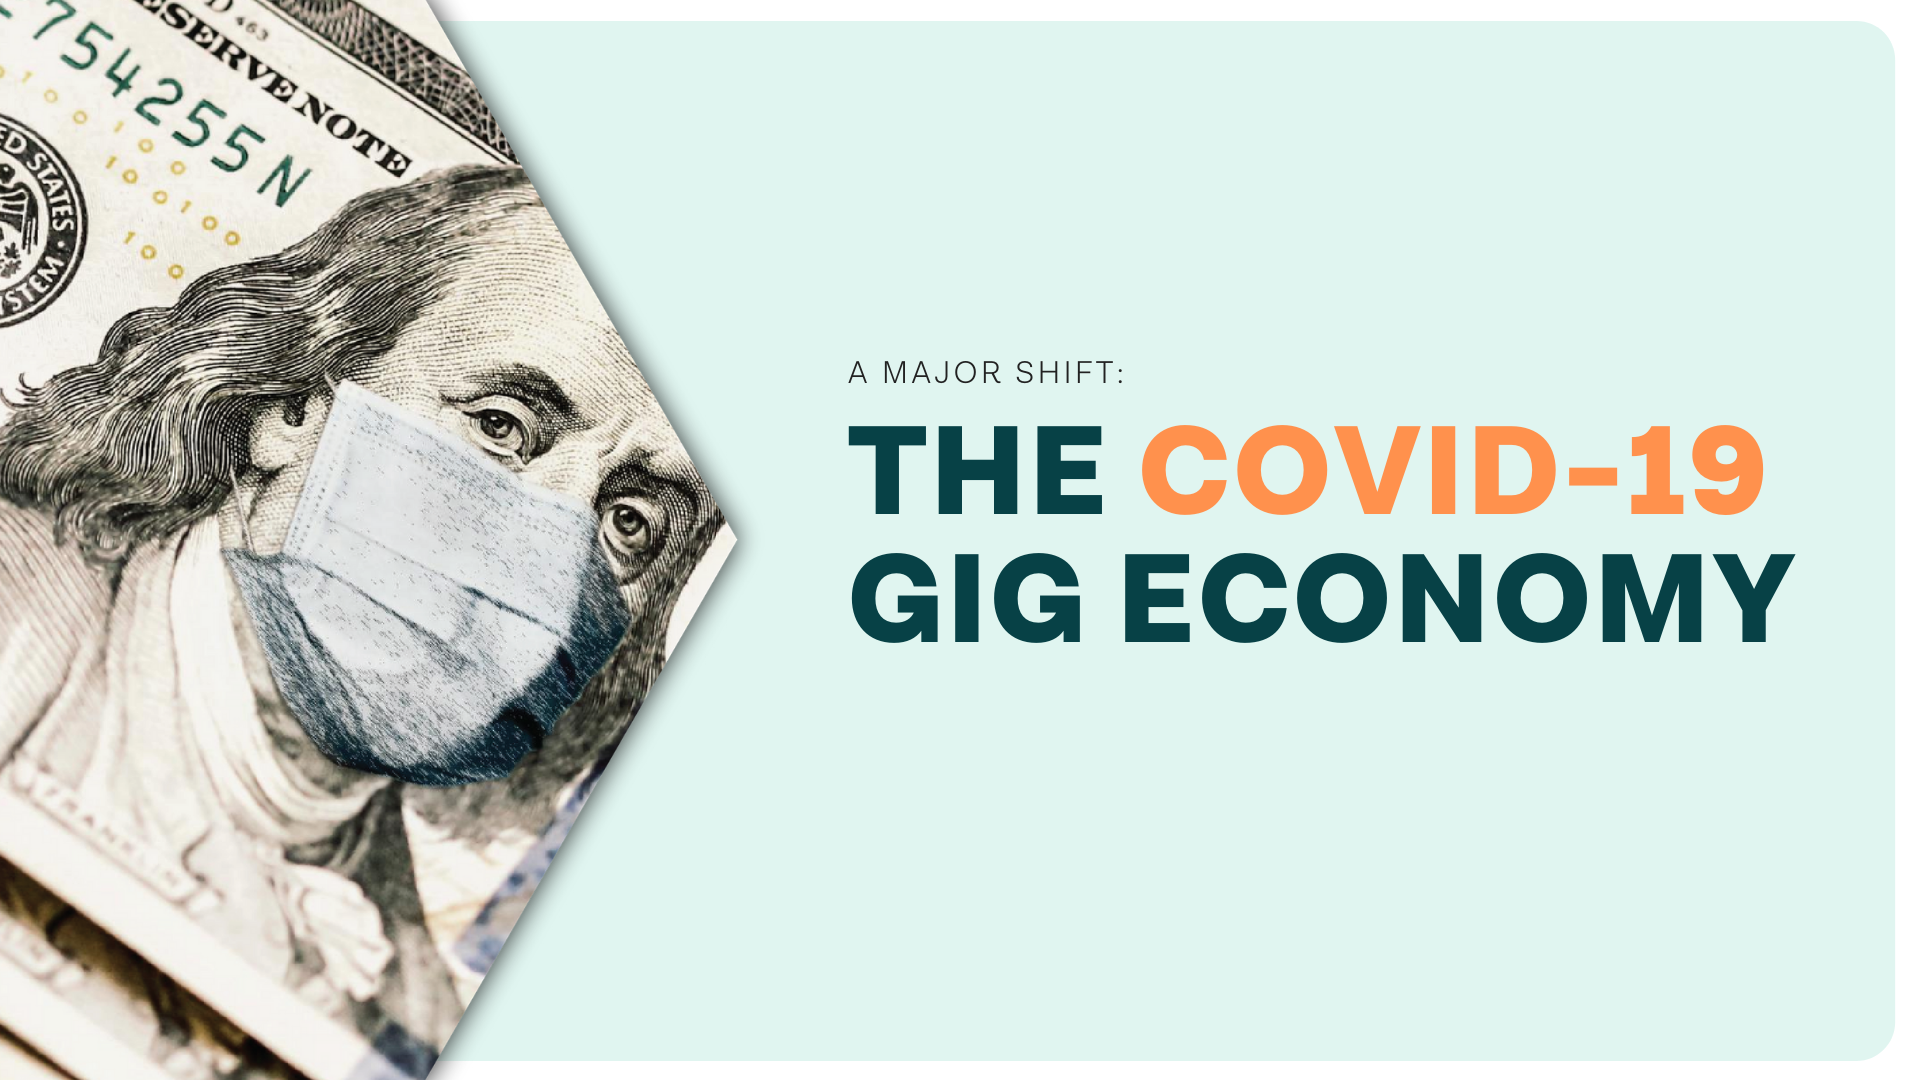 The Covid-19 Gig Economy